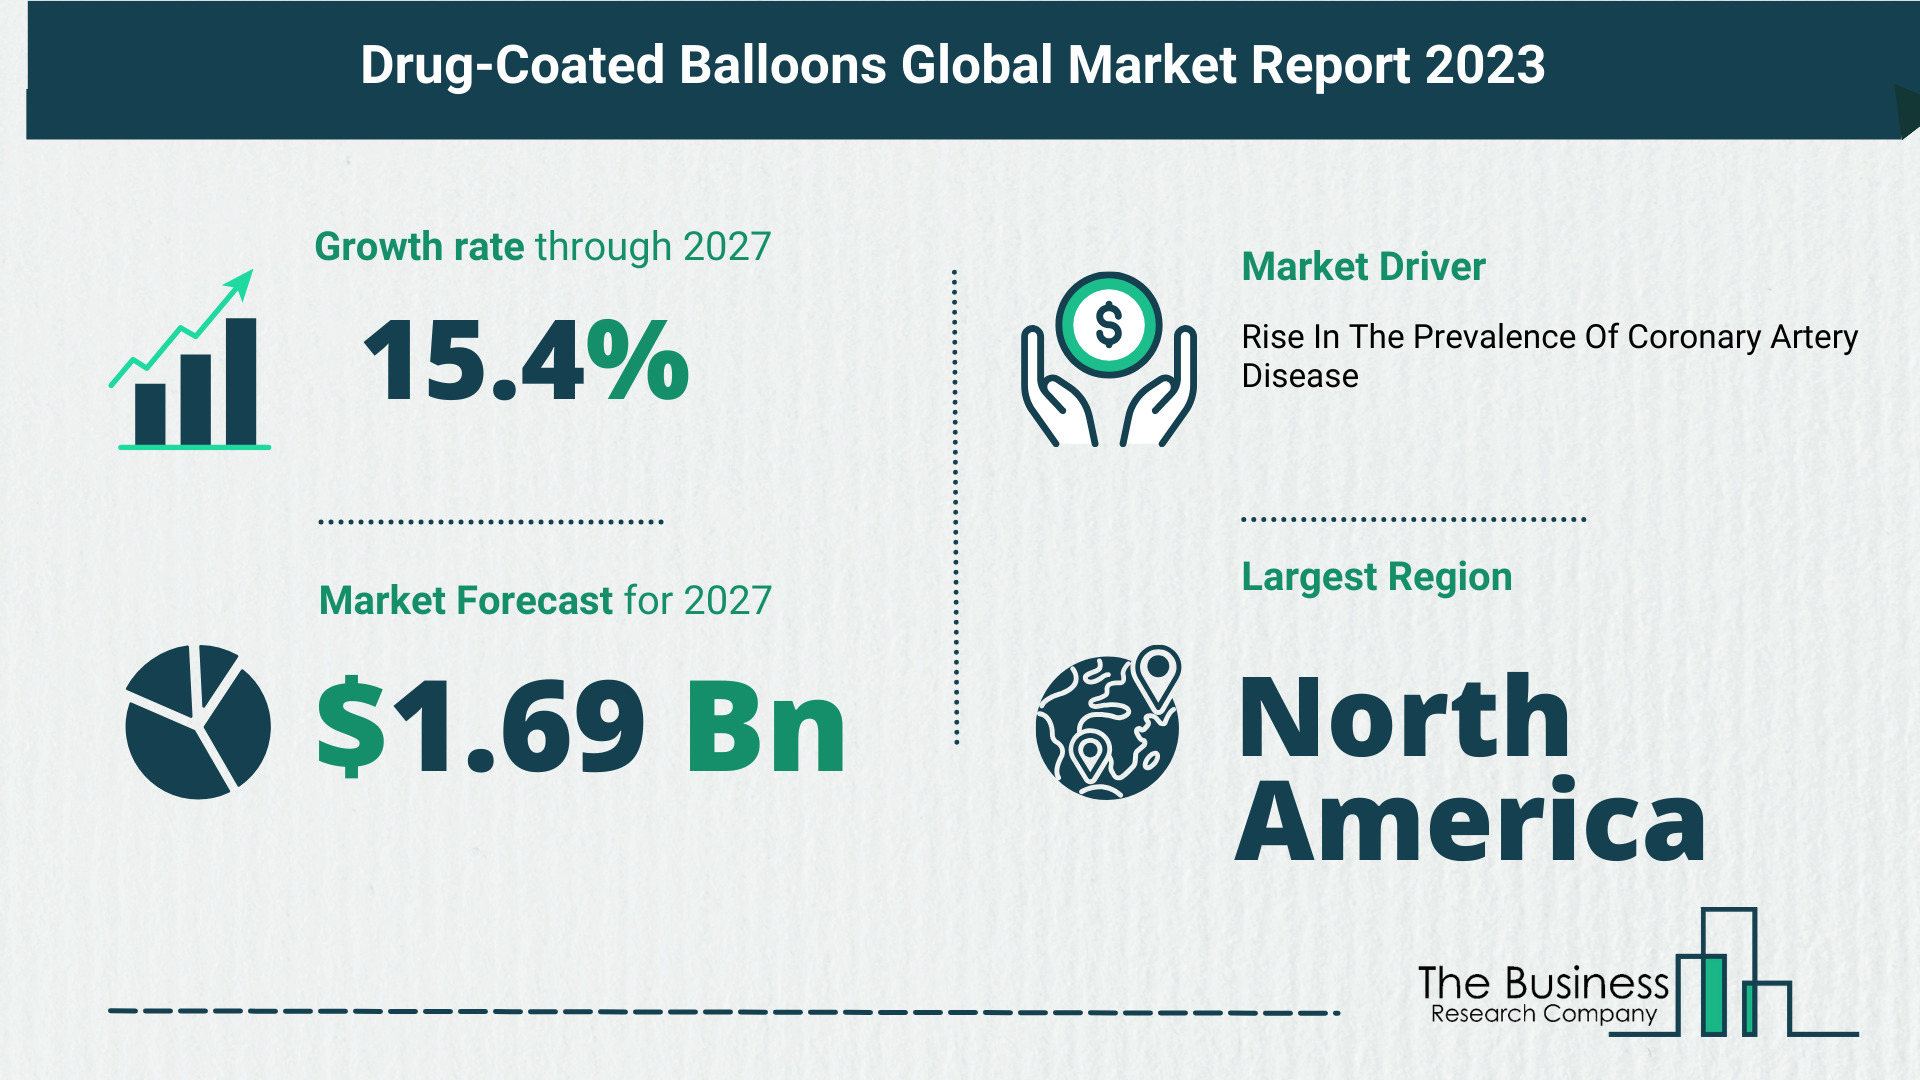 Global Drug-Coated Balloons Market